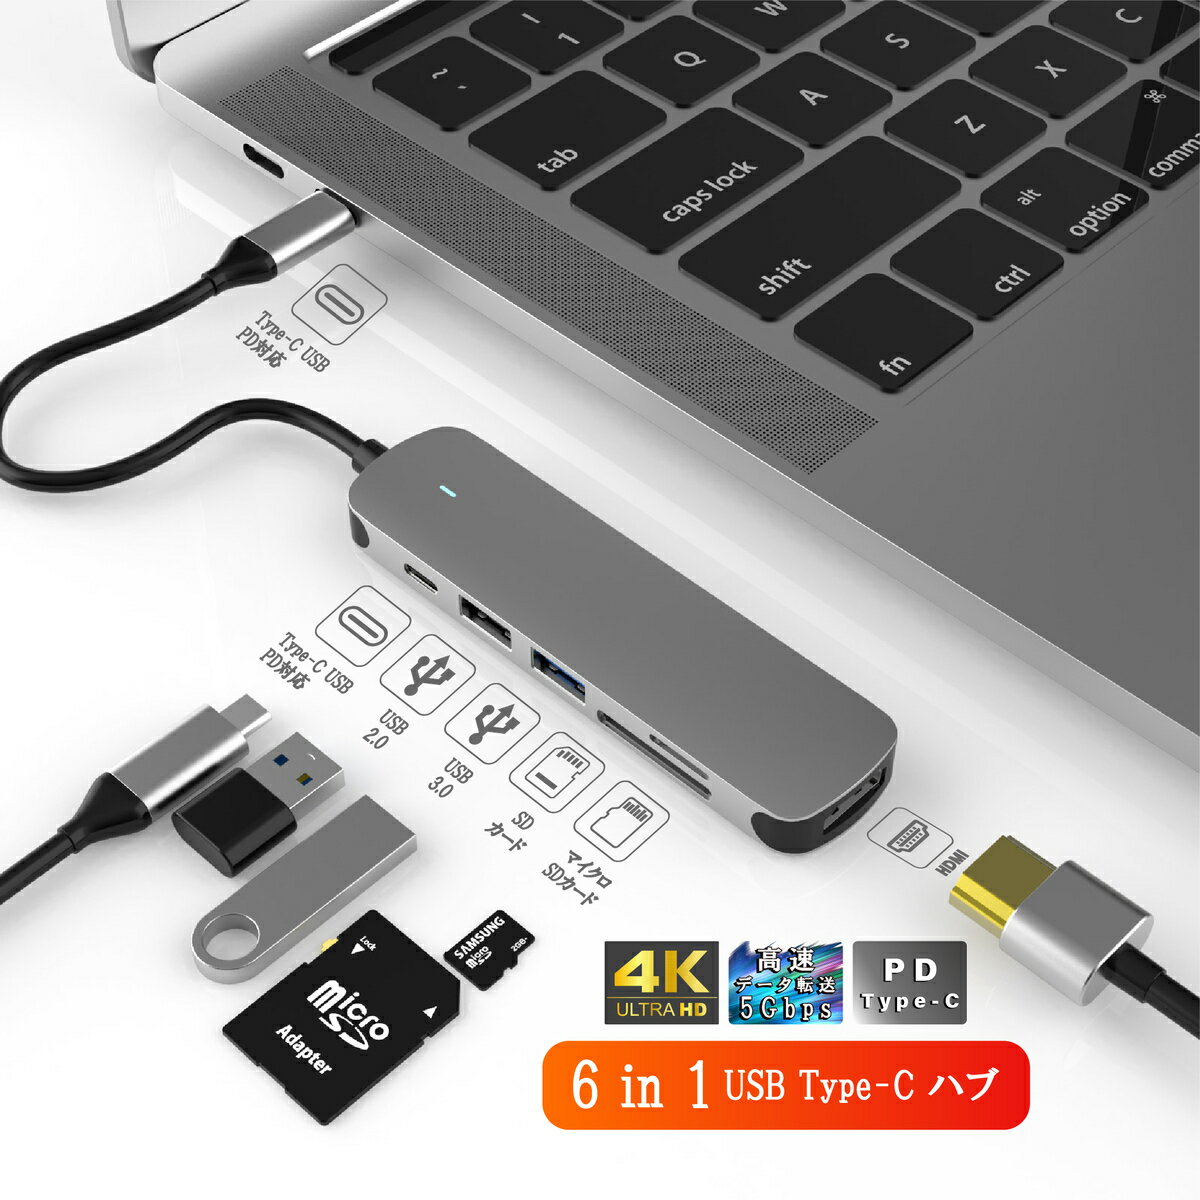 USB Type-C ハブ 6in1 SDカード リーダー HDMI 4K USB 3.0 PD対応 Macbook iPad Android アンドロイド パソコン Windows Surface NintendoSwitch 変換 microSD TF 高速 転送 音楽 写真